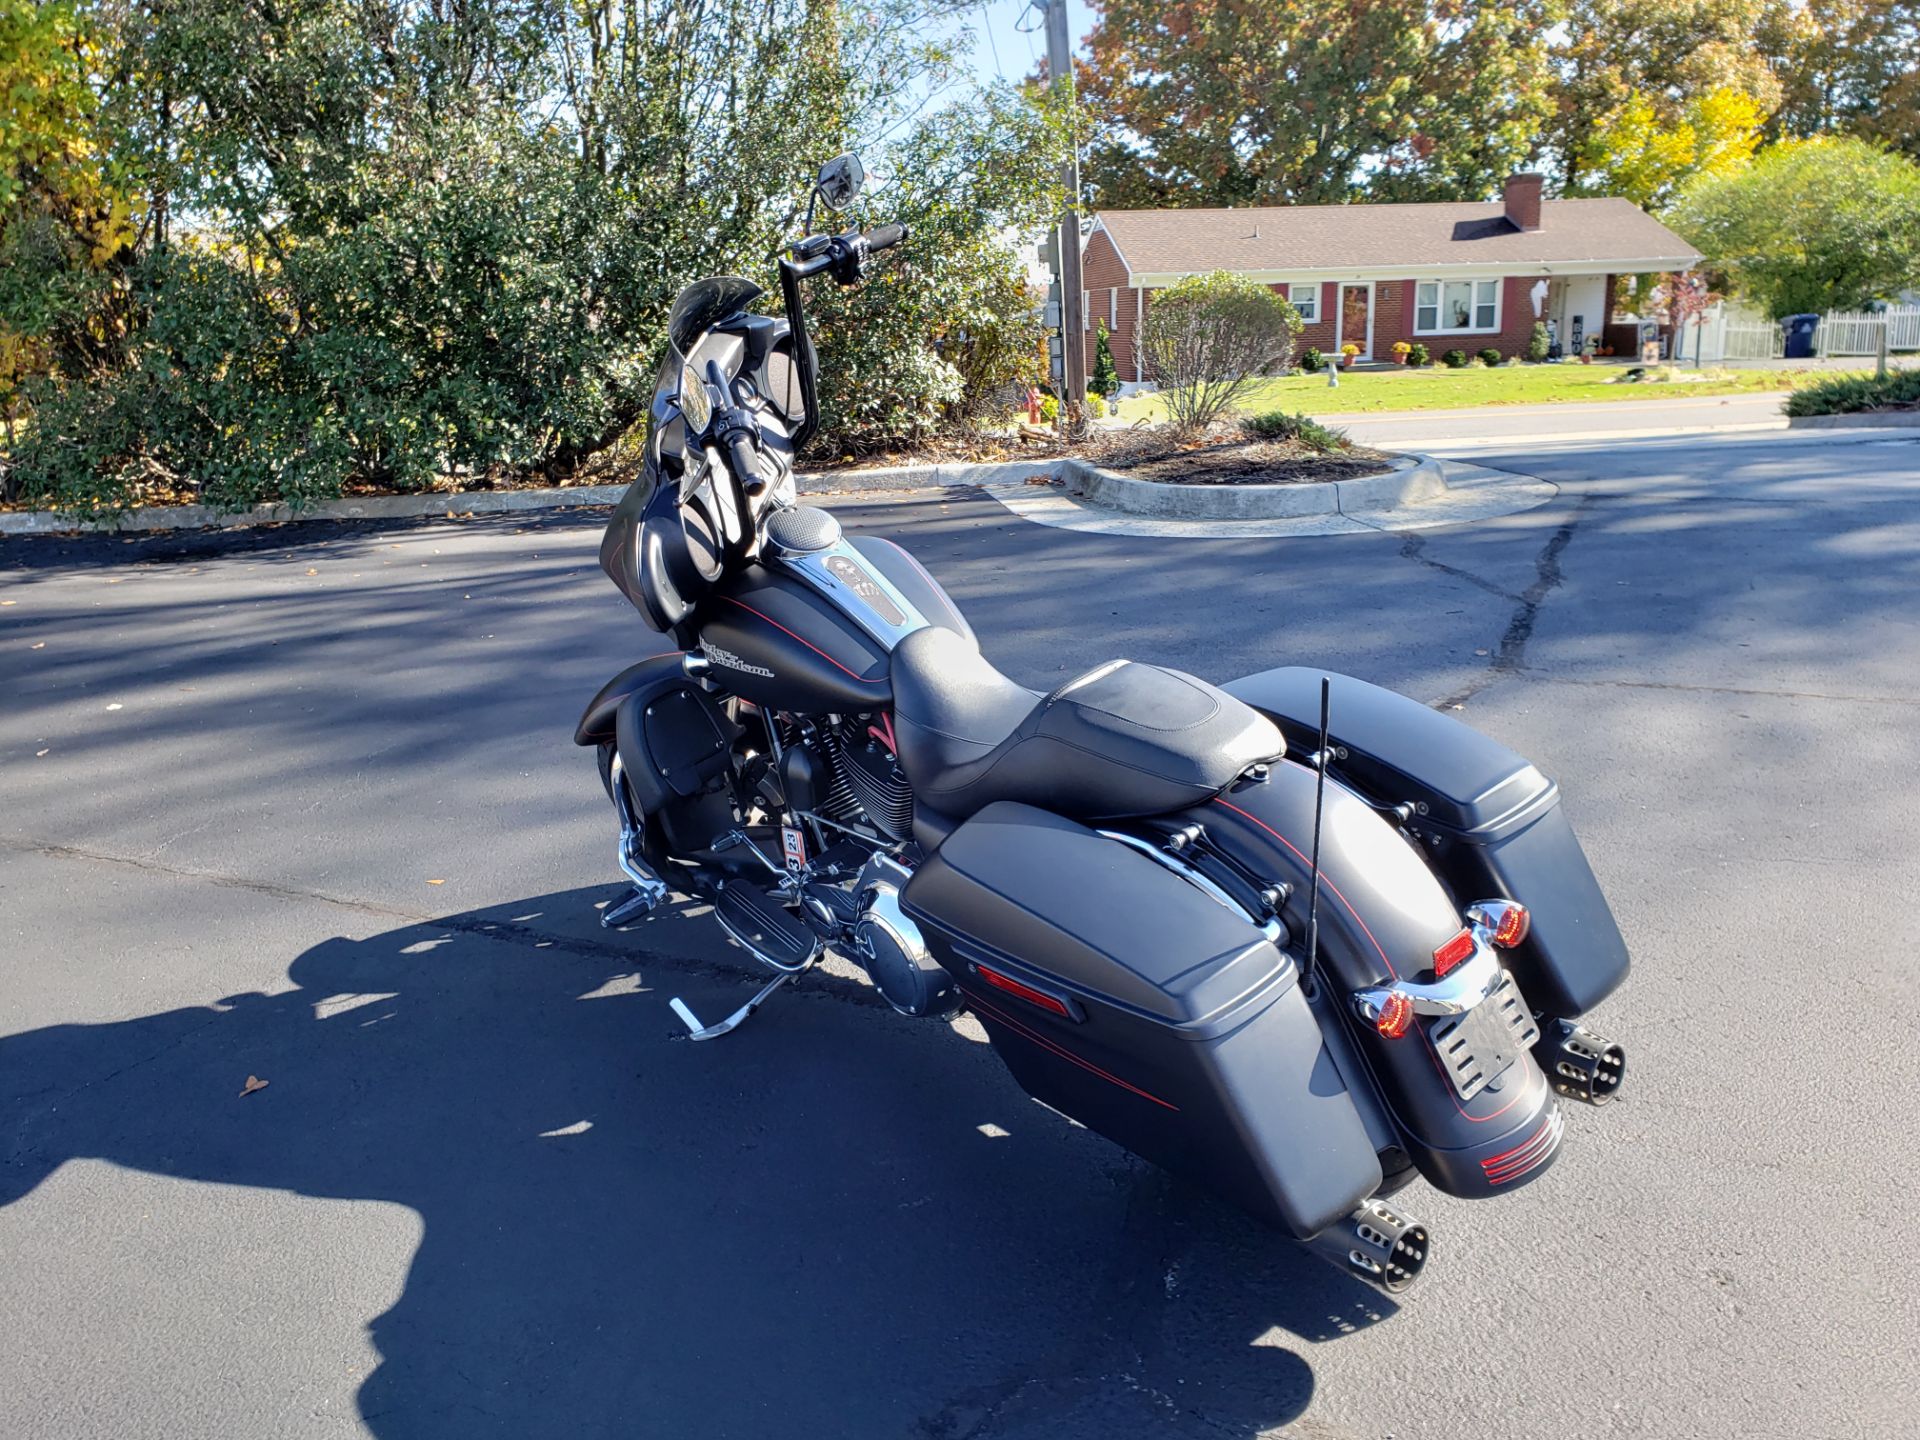 2016 Harley-Davidson Street Glide® Special in Lynchburg, Virginia - Photo 11